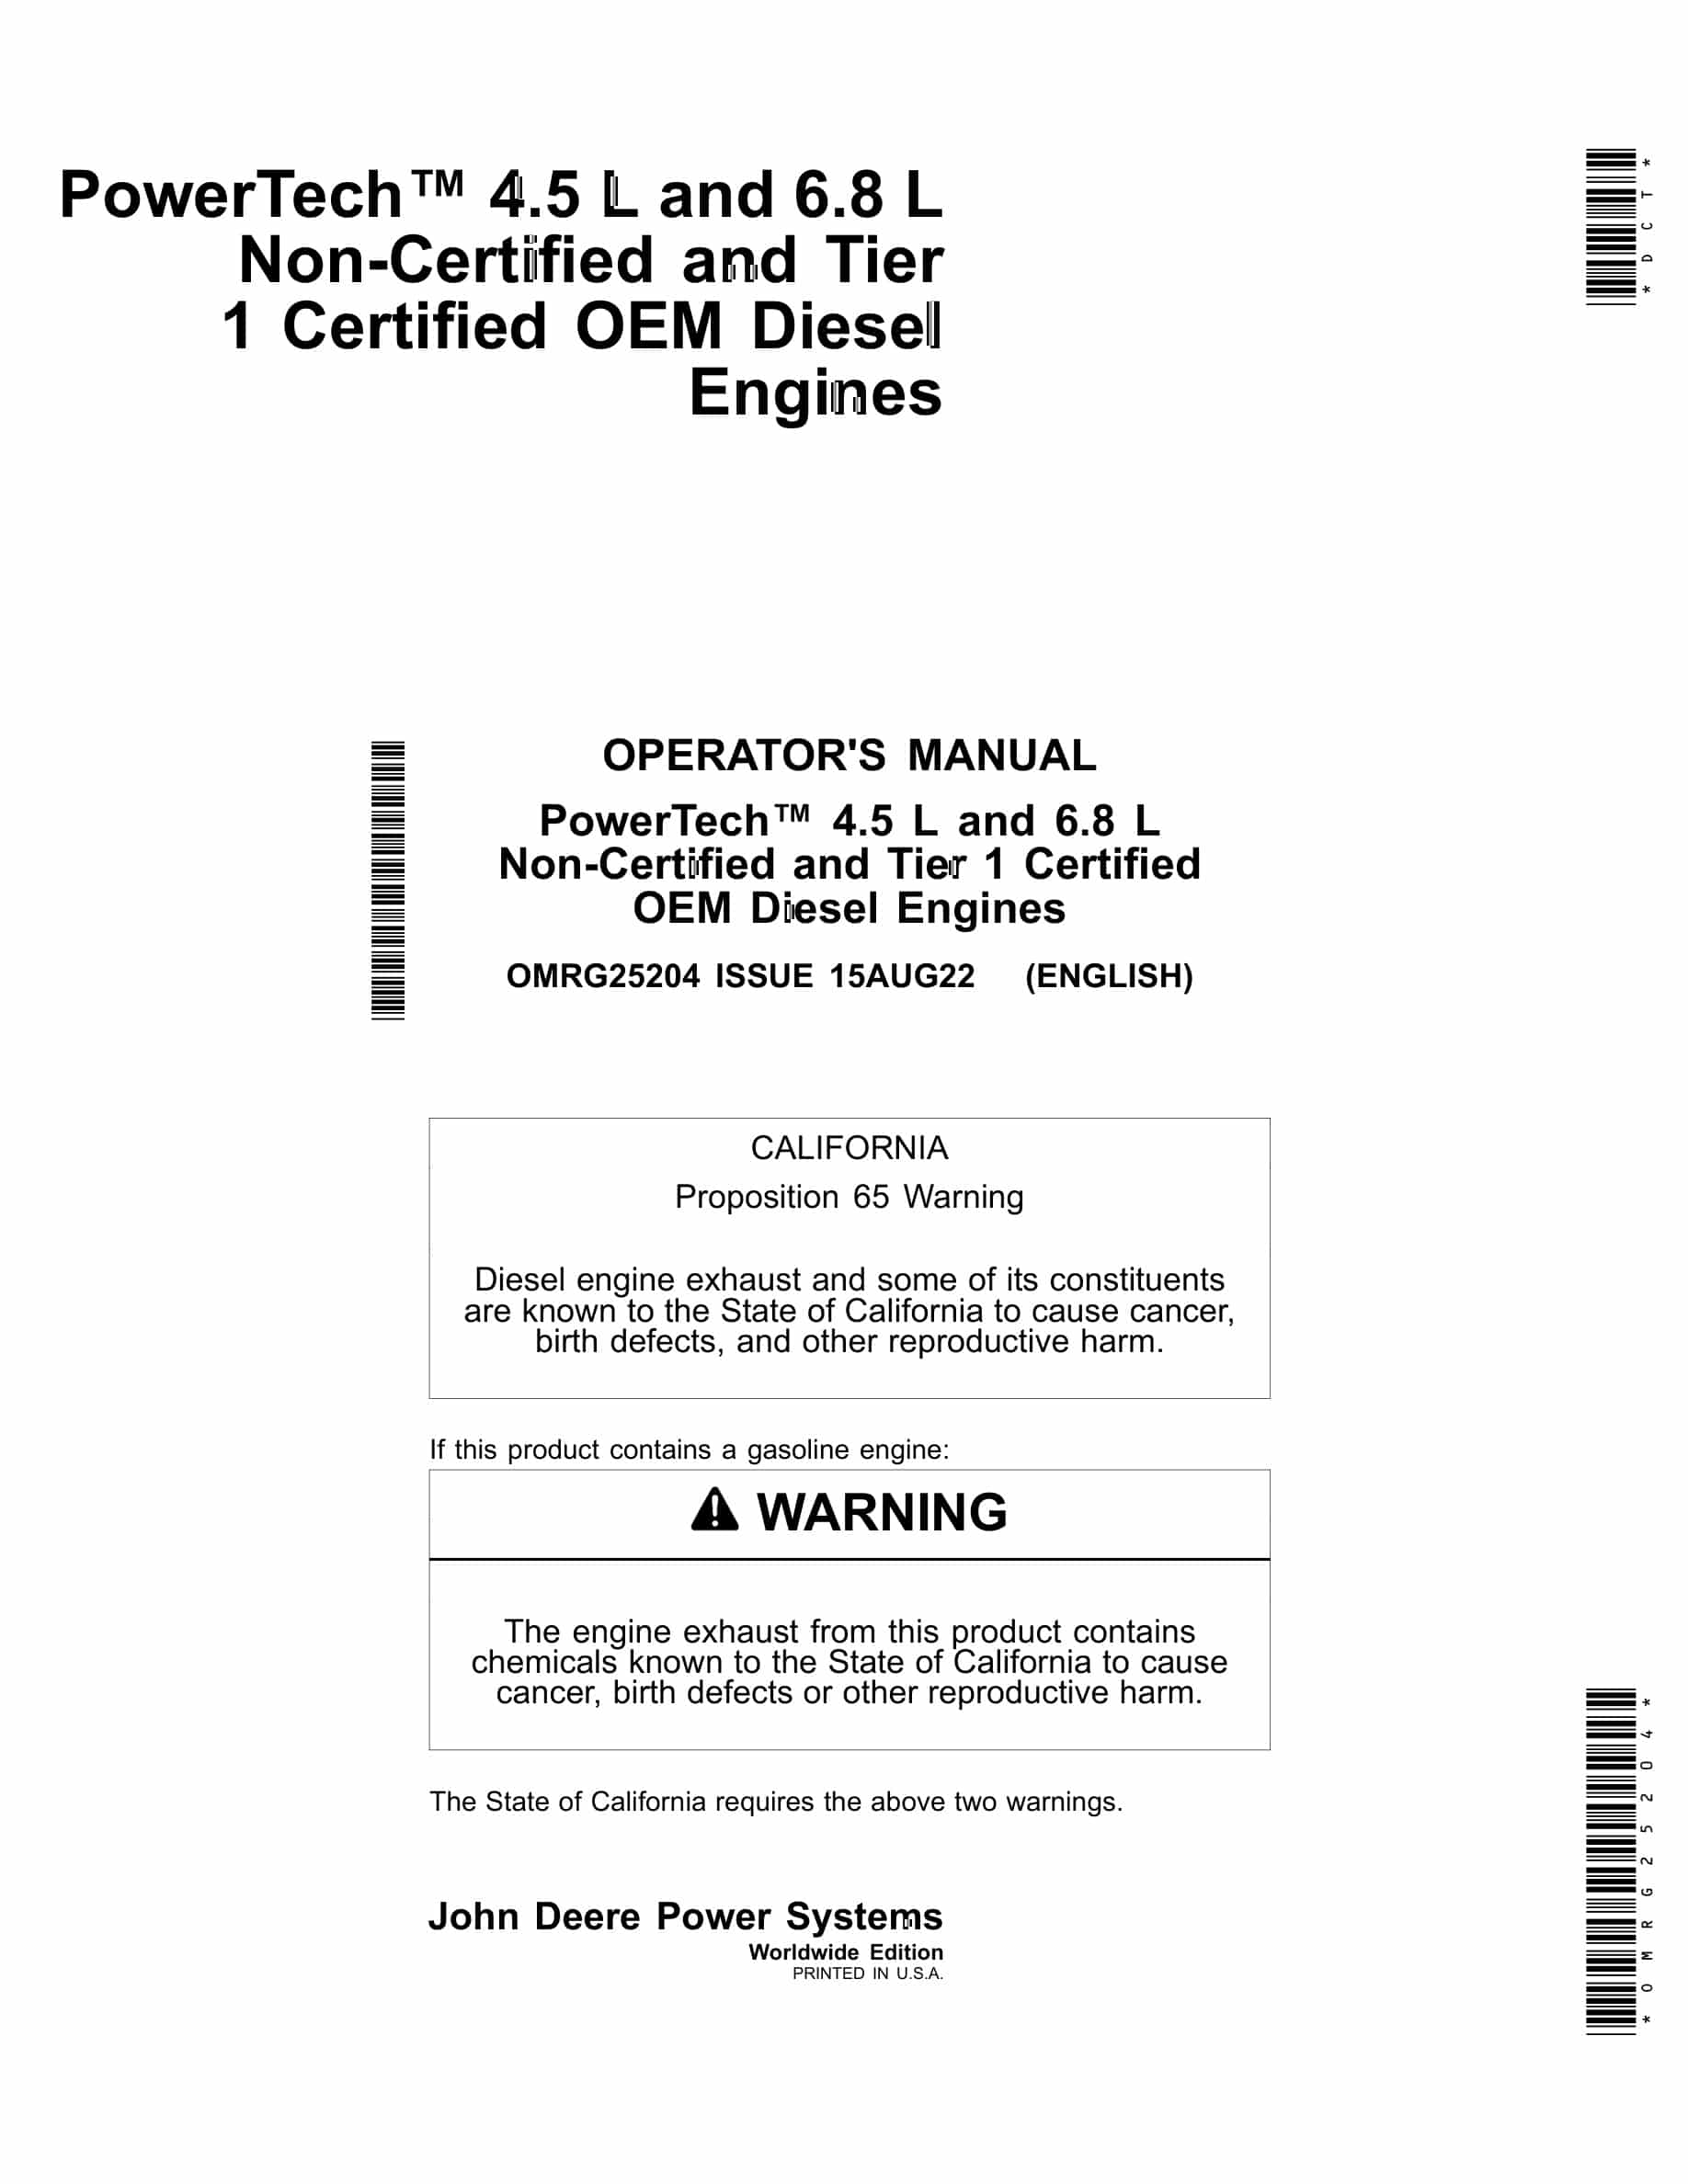 John Deere PowerTech 4.5 L and 6.8 L Non Operator Manual OMRG25204-1